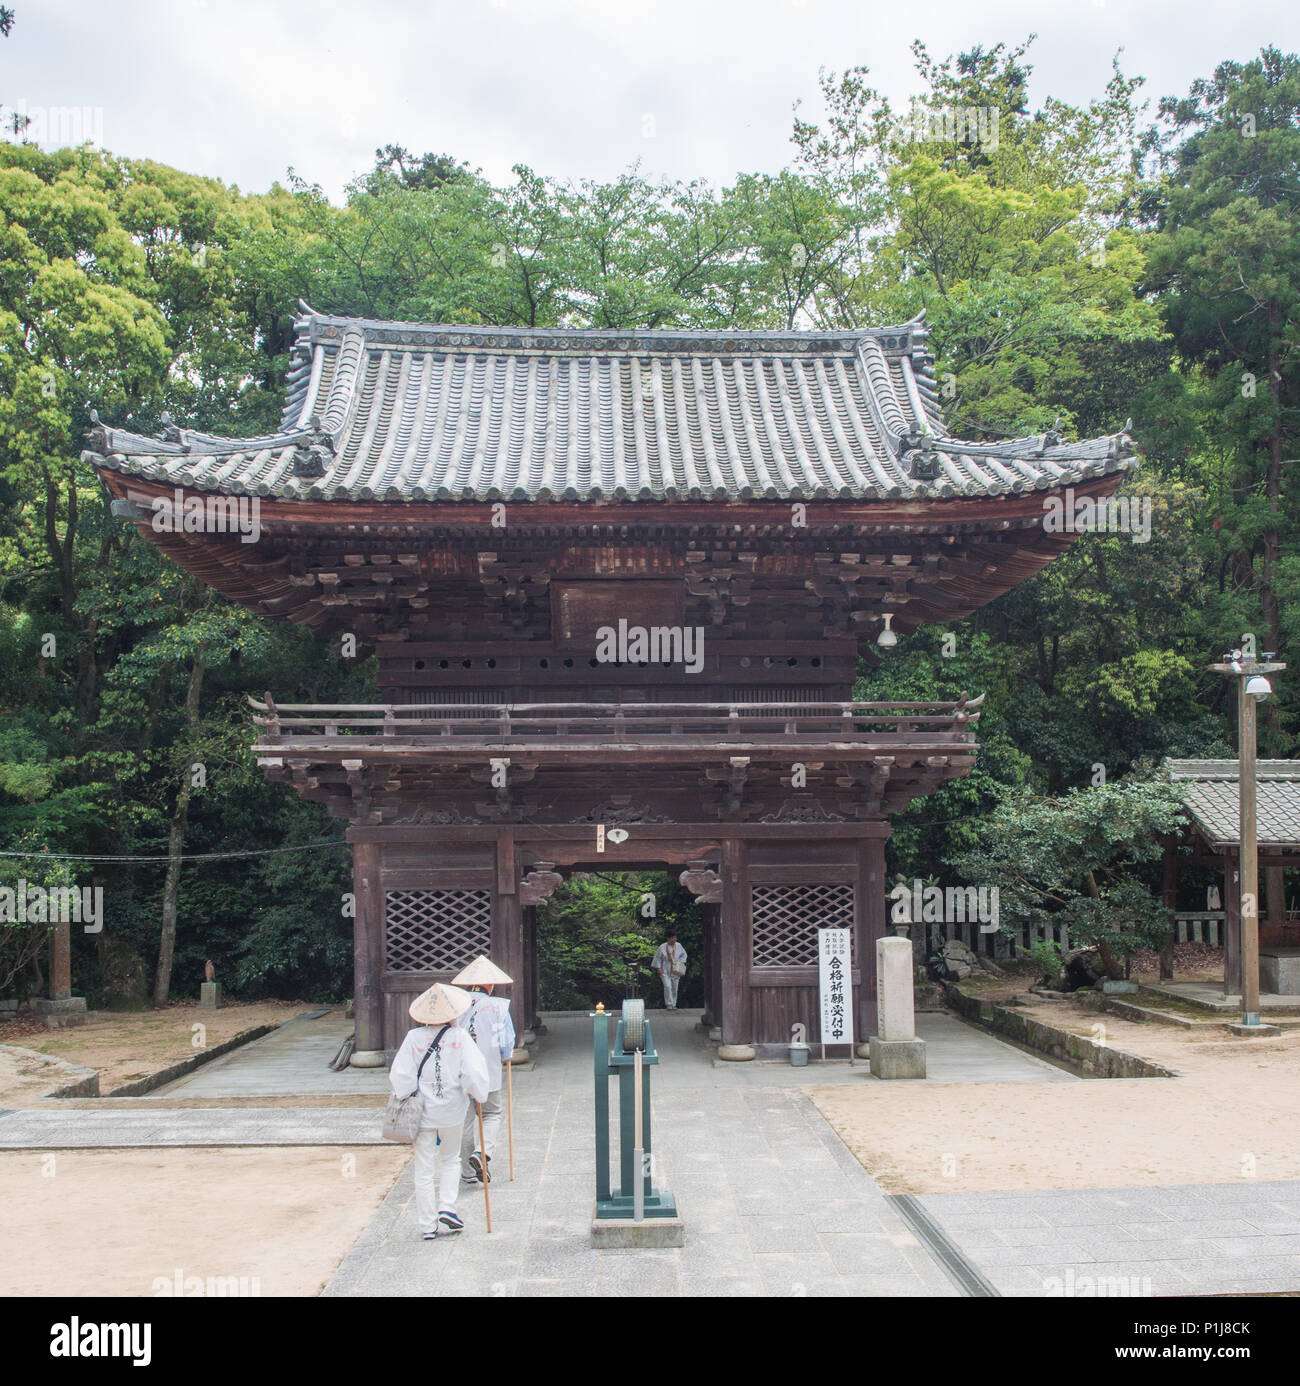 Zwei henro pigrims verlassen, ein ankommen, die Gate House, Taisanji Tempel 52, Shikoku 88 Tempel Wallfahrt, Ehime, Japan. Stockfoto